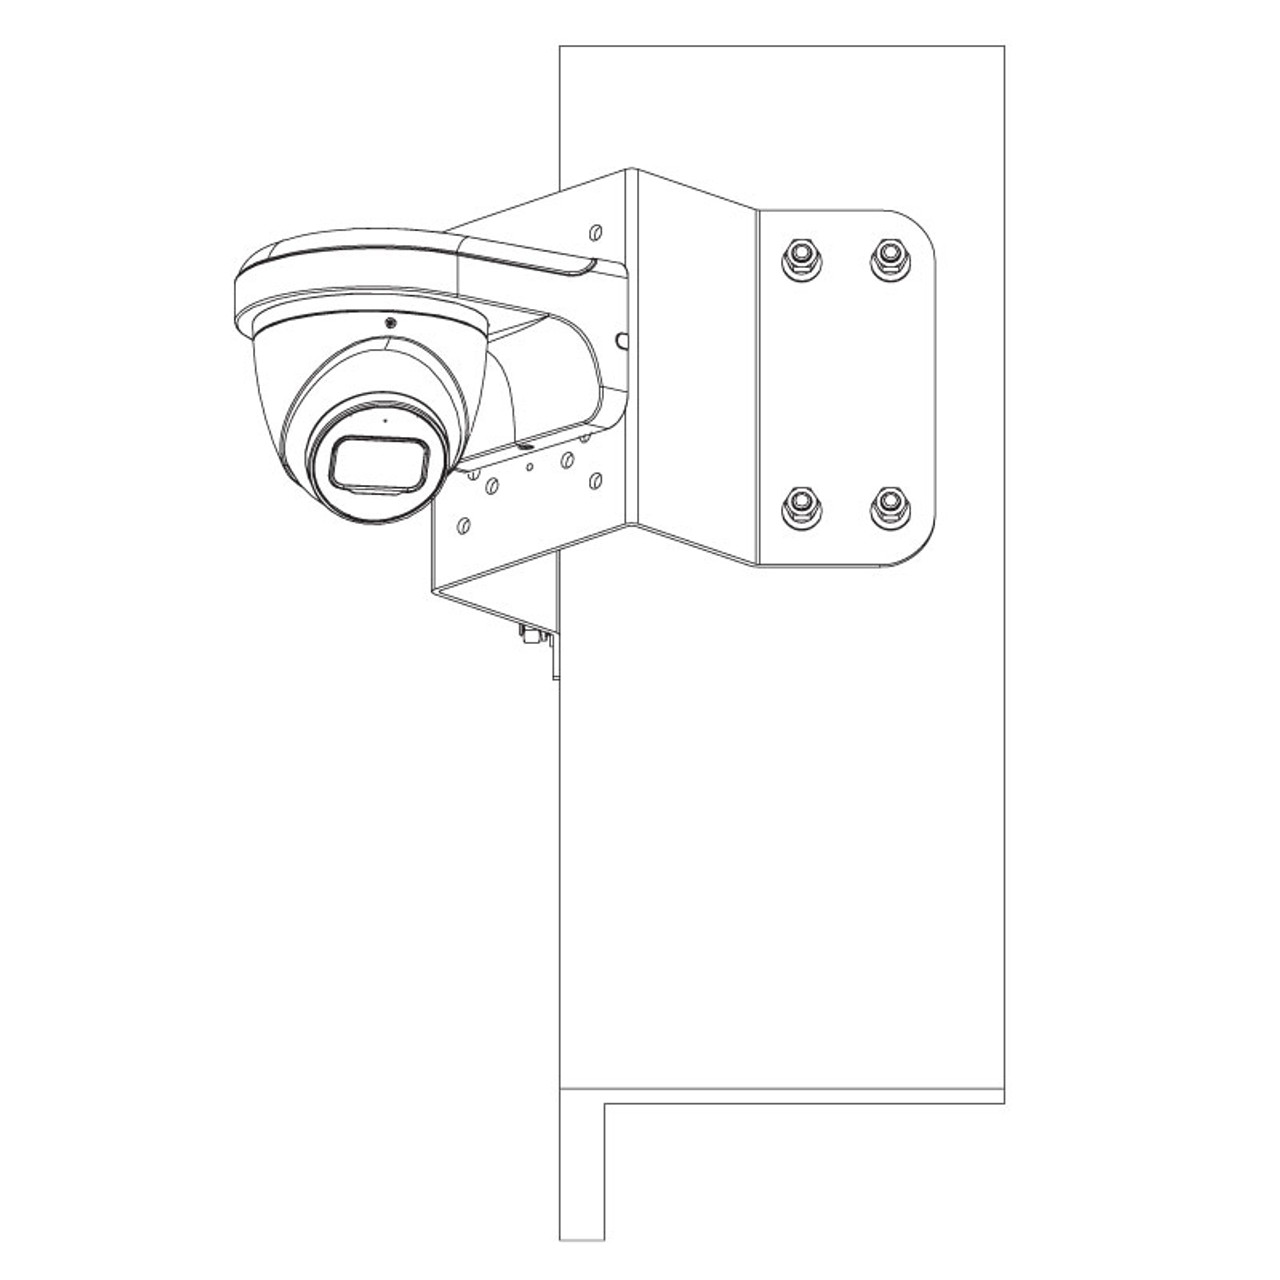 Watchguard Compact 8MP Fixed IP67 Mini Turret IP Camera